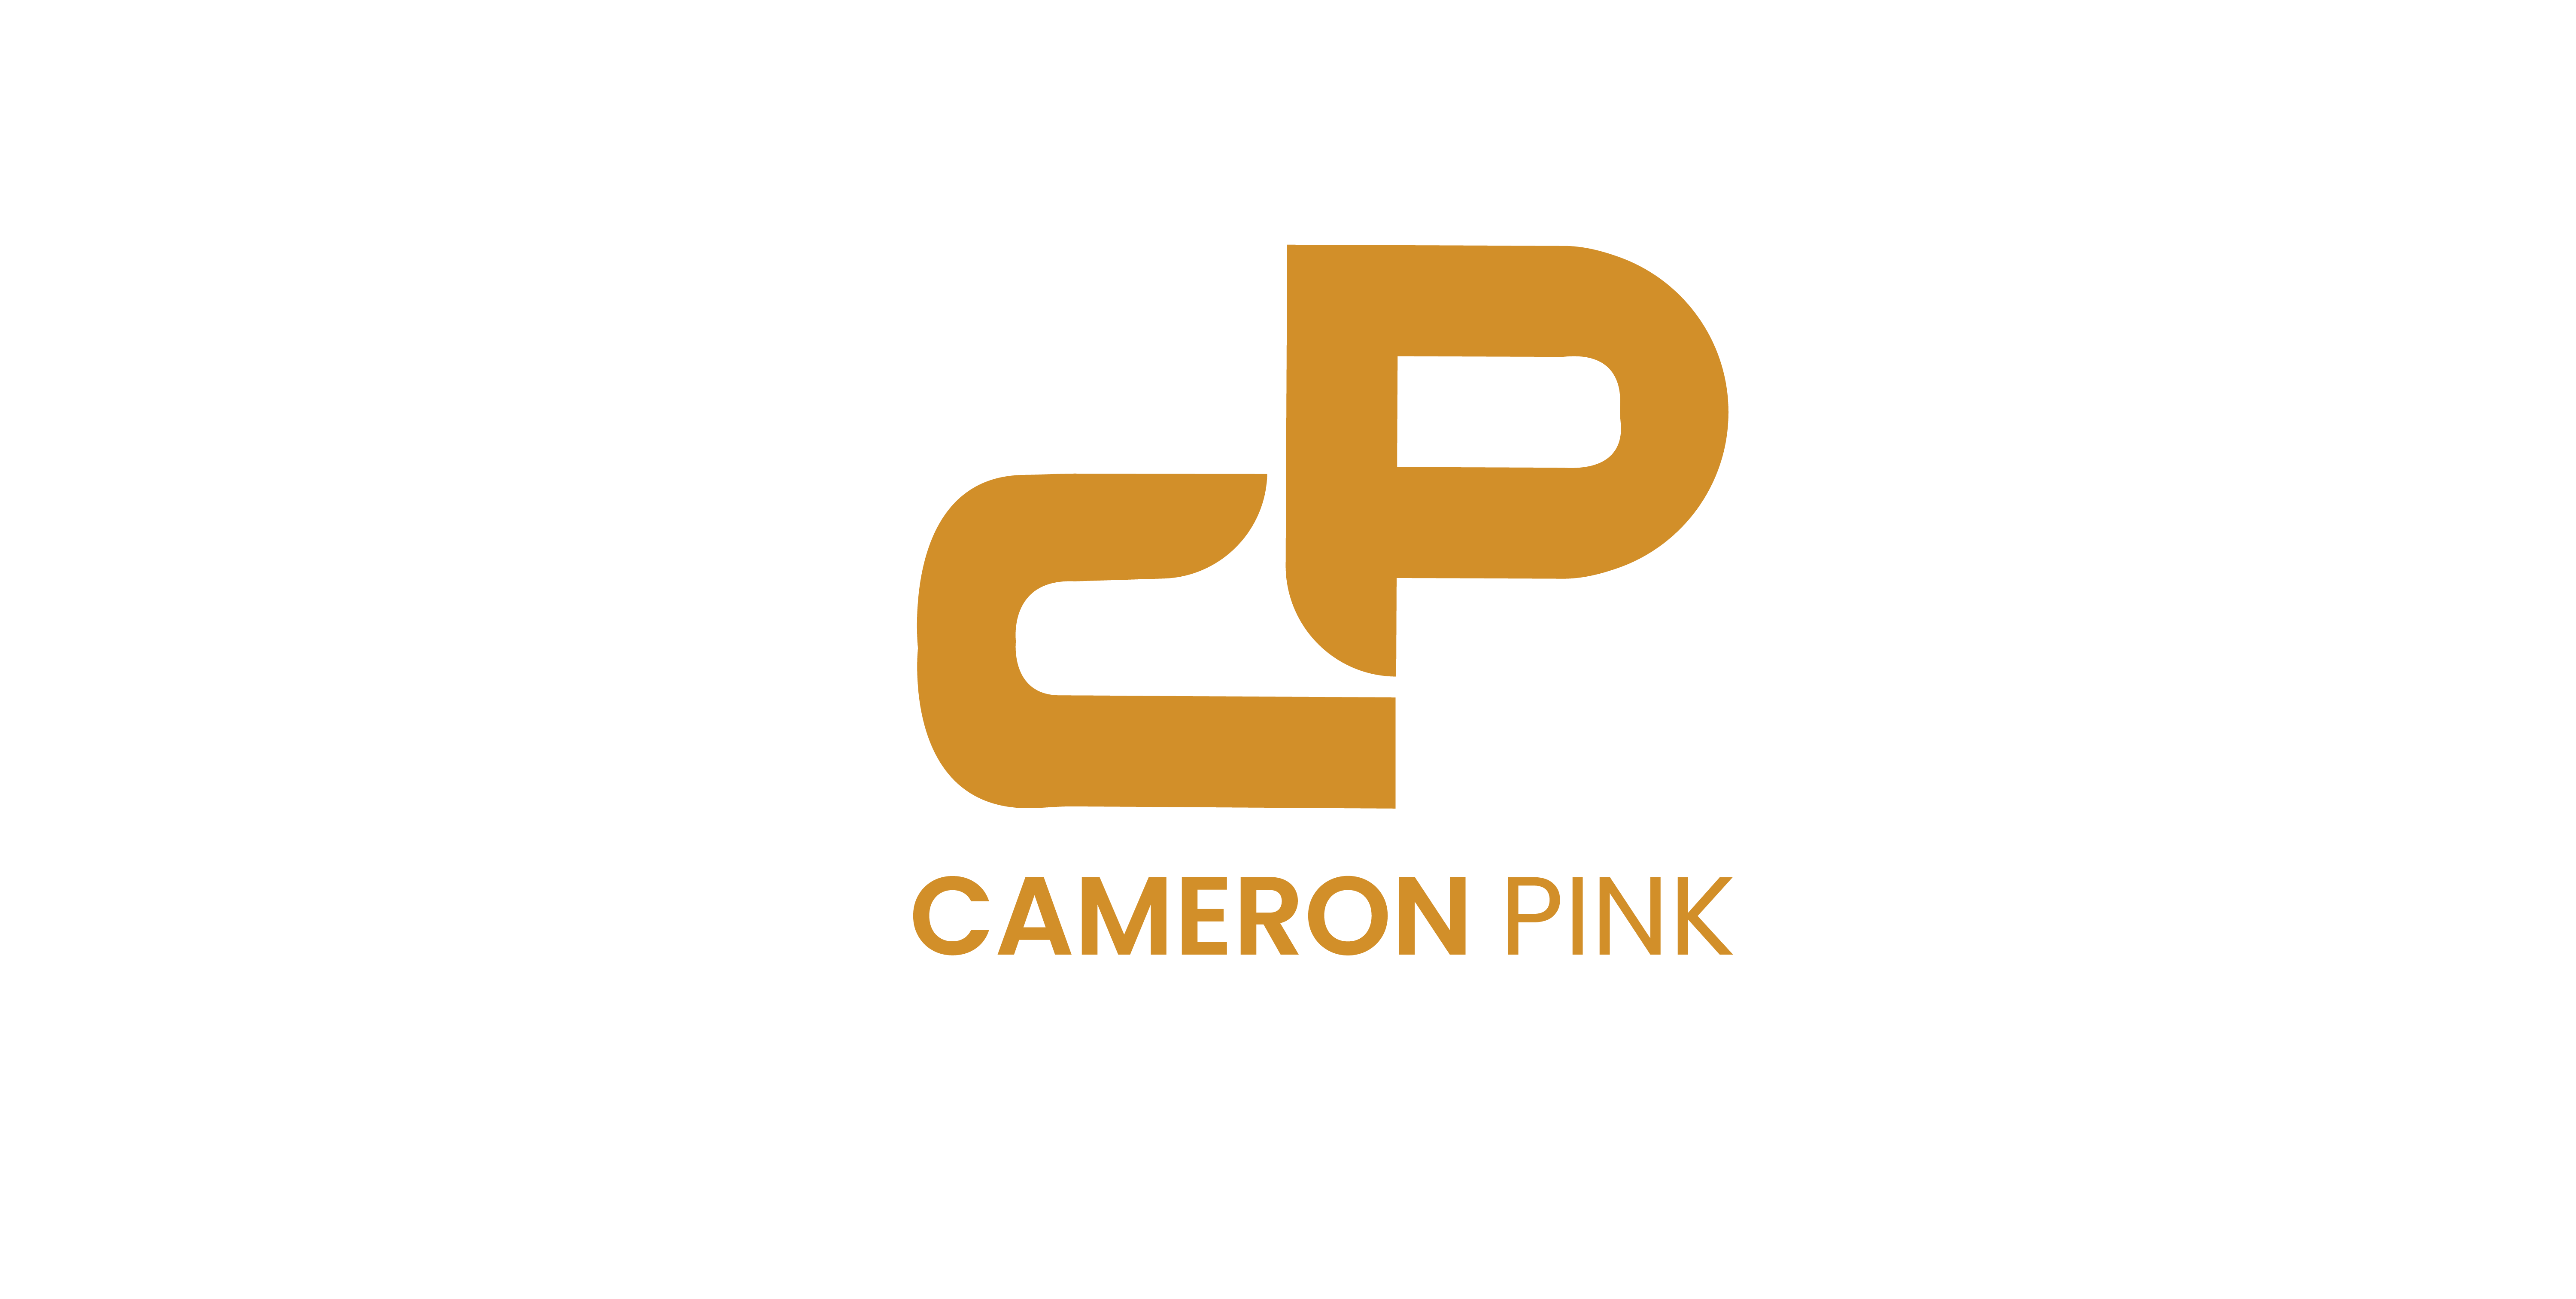 Cameron Pink